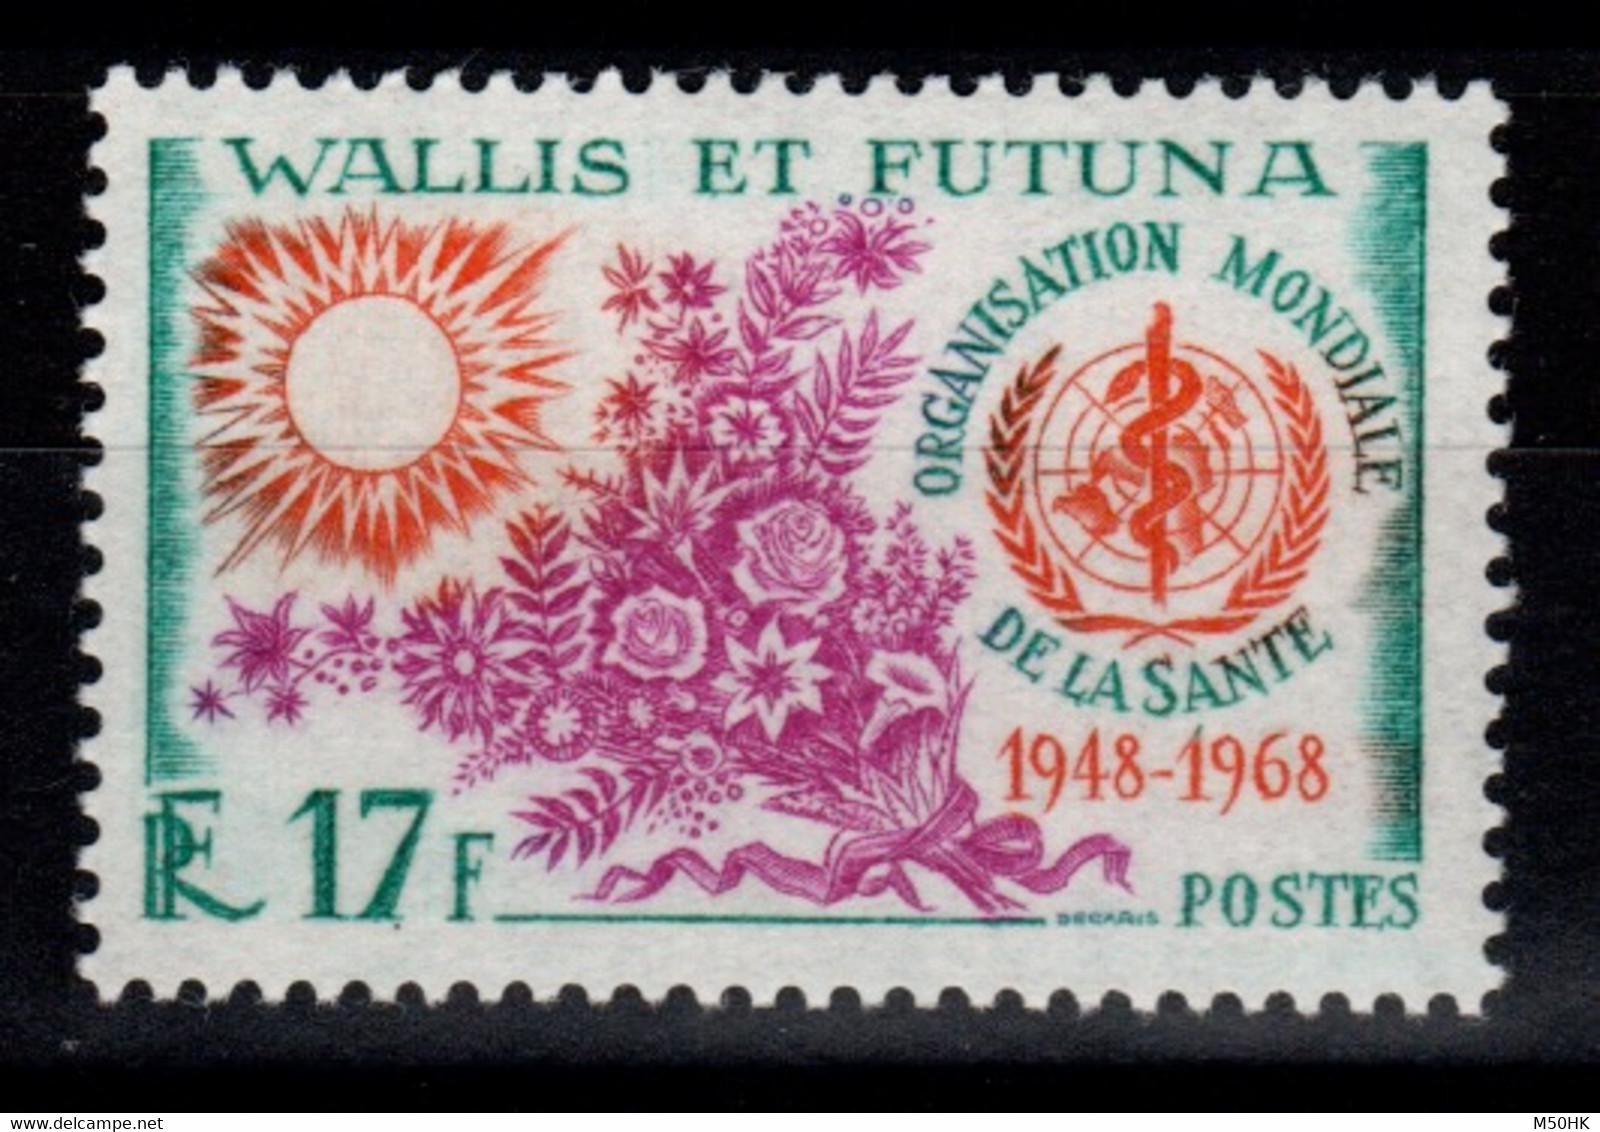 Wallis & Futuna - YV 172 N** OMS - Ungebraucht